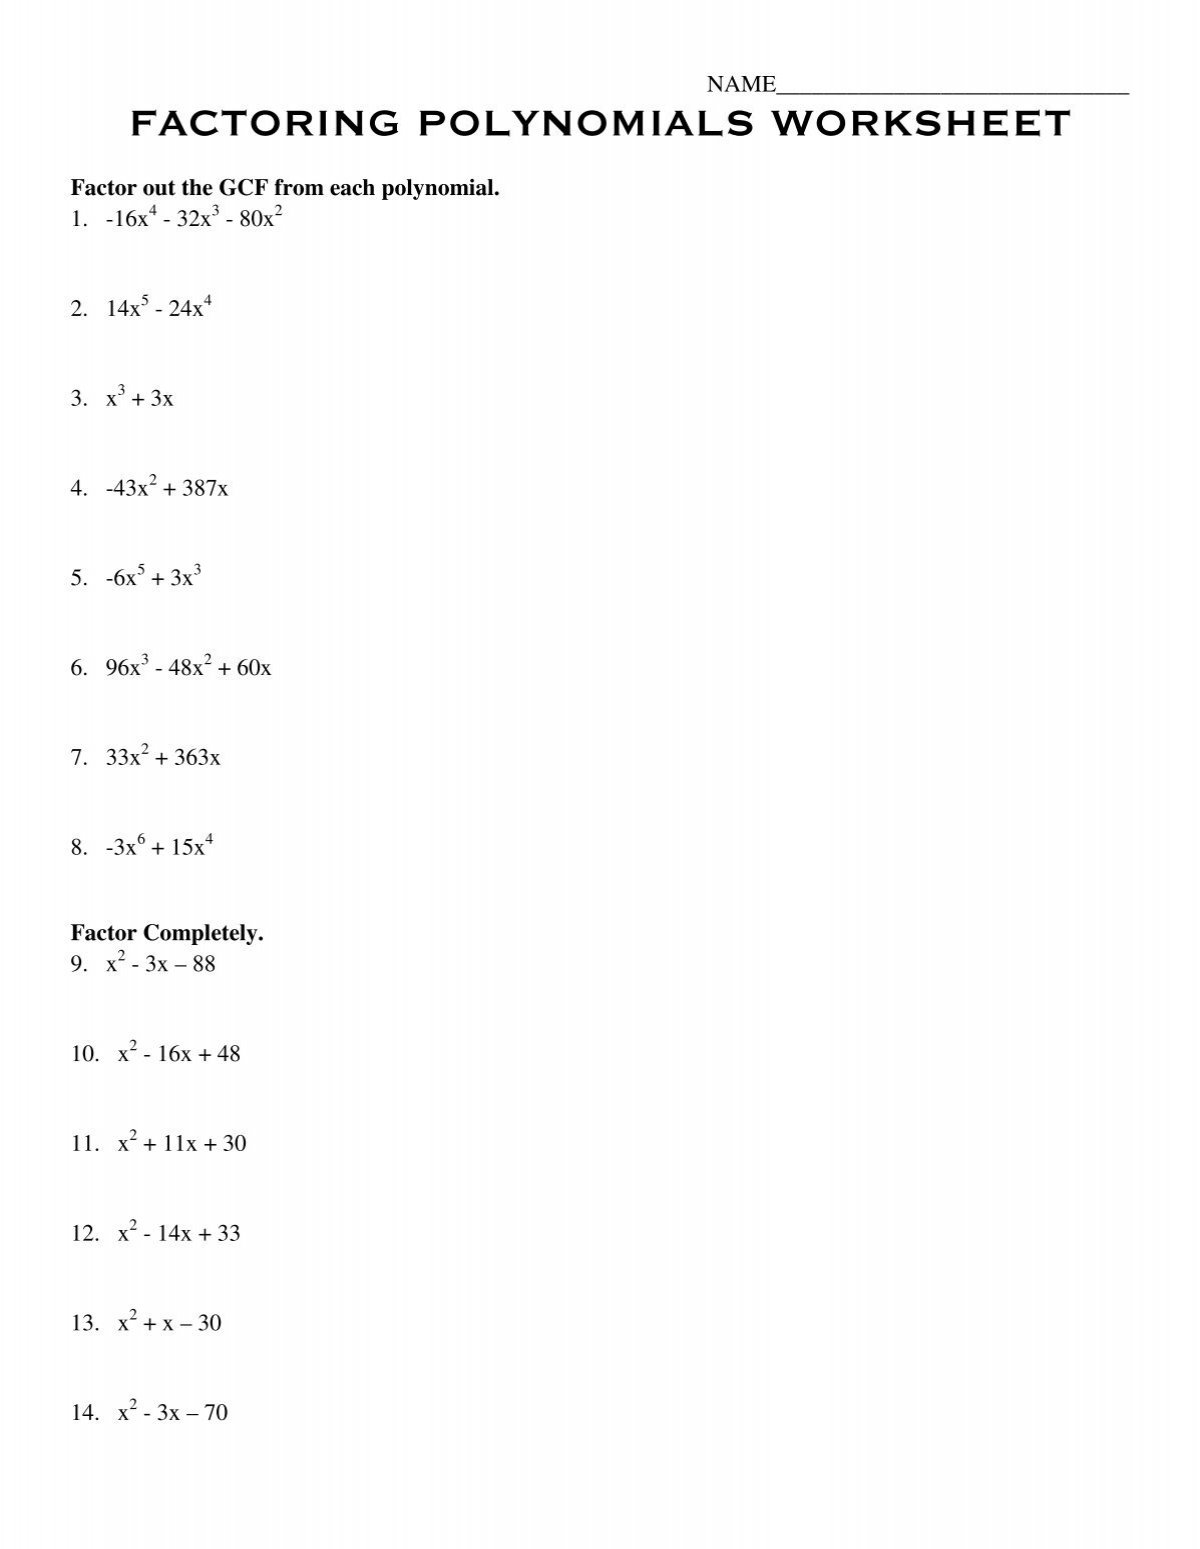 factoring polynomials worksheet grade 8